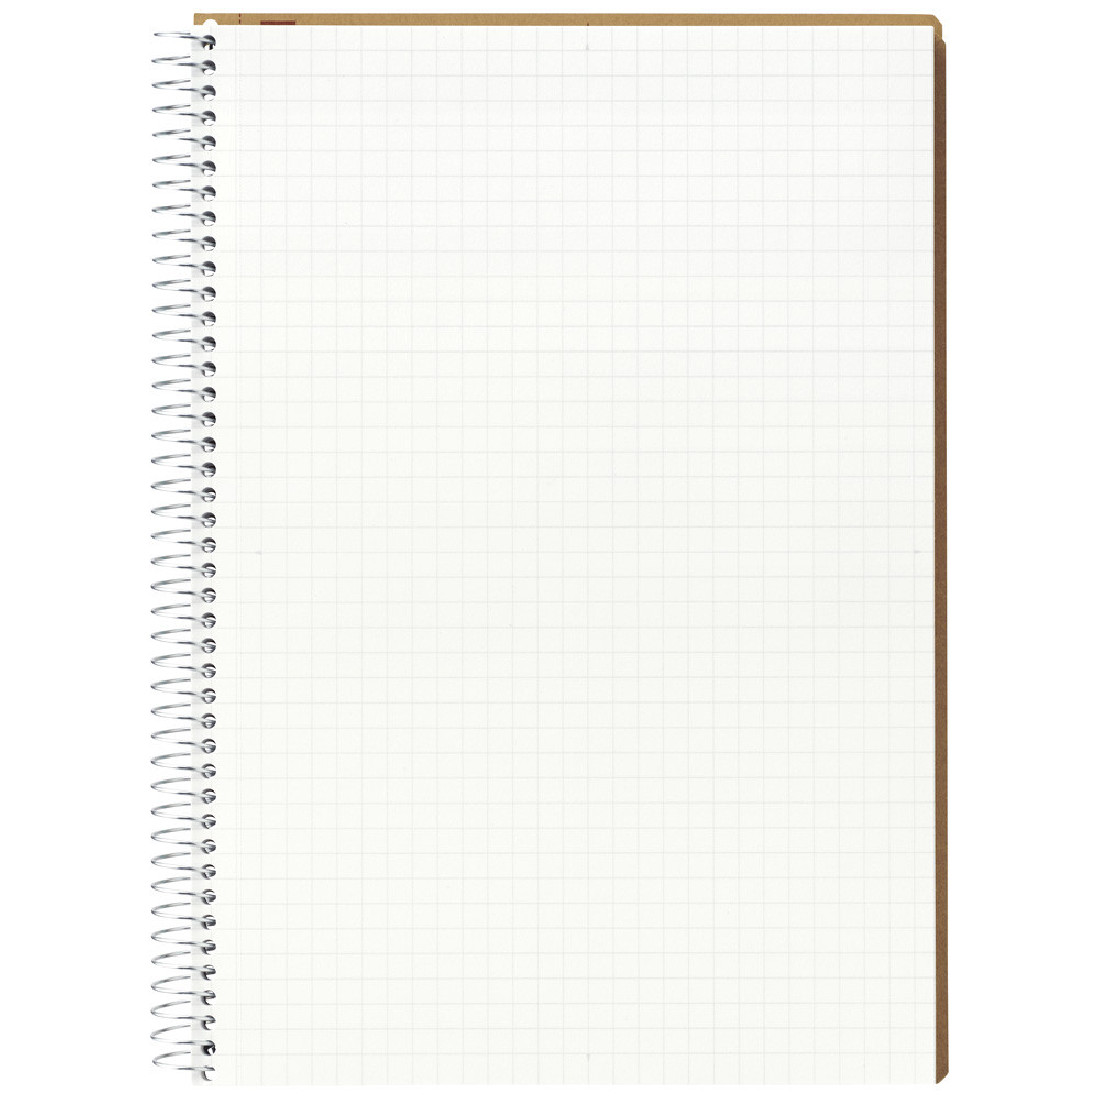 Maruman A5 spiral notebook squared paper 80 sheets N247ES